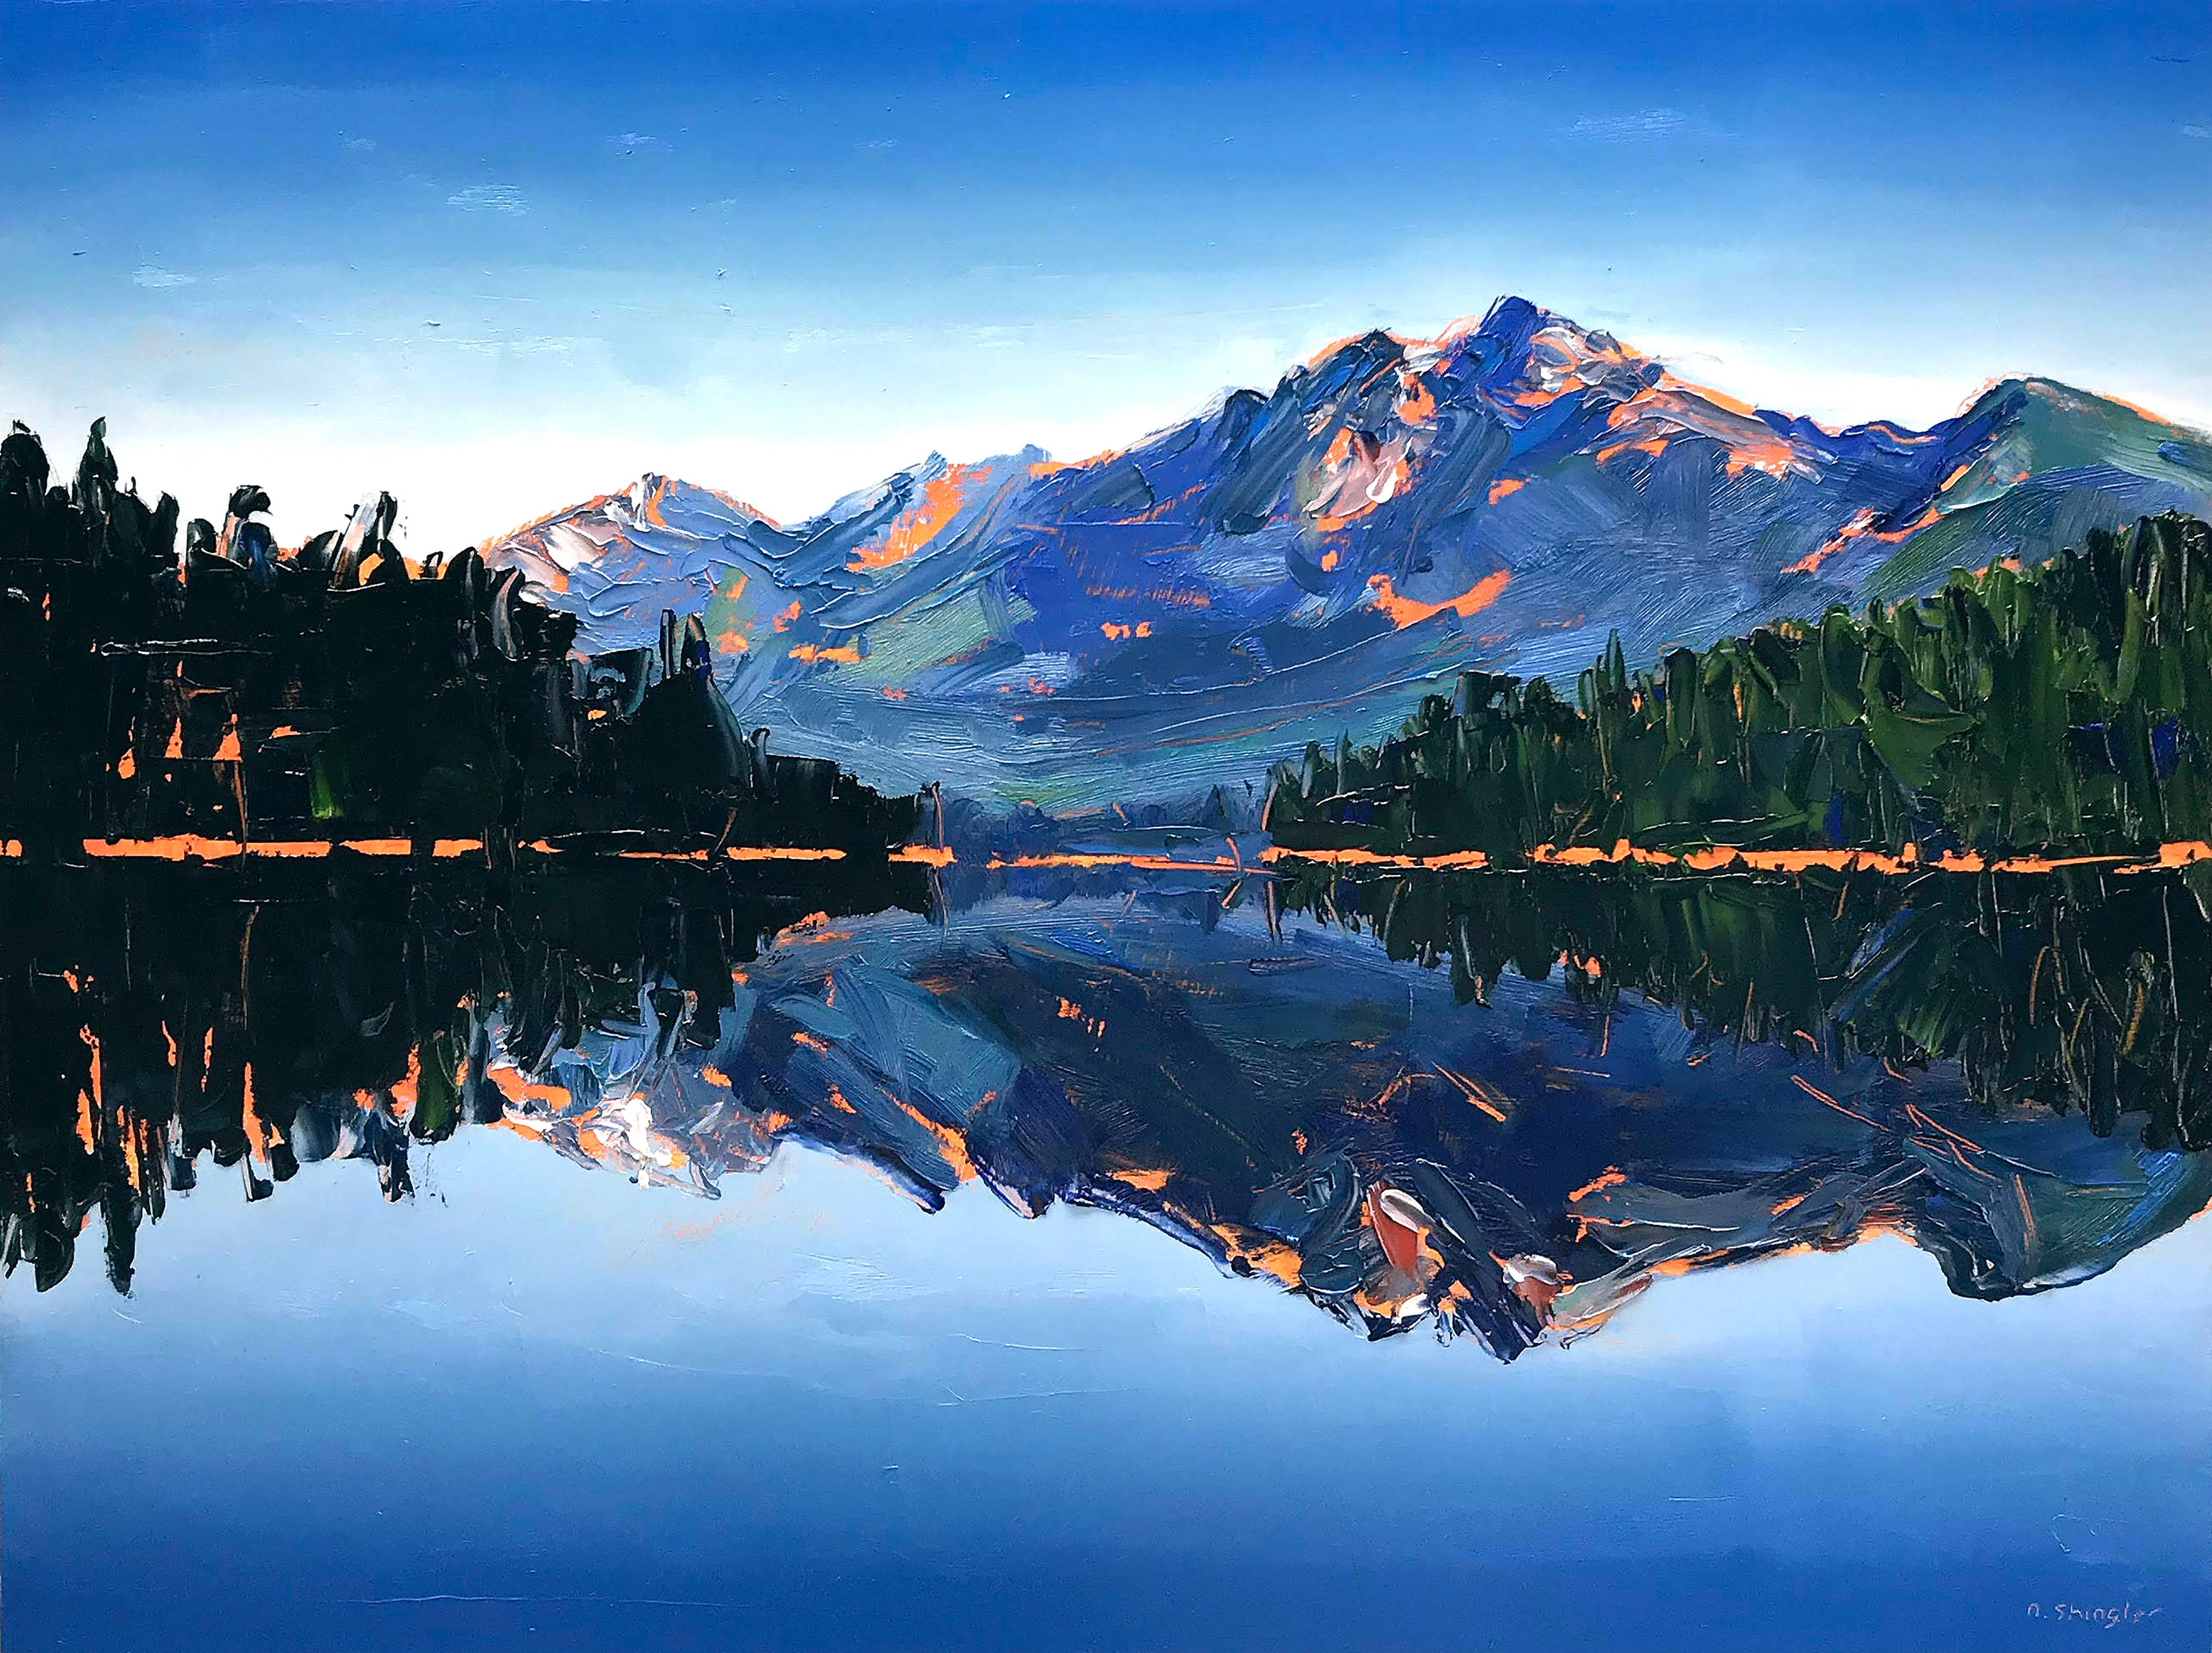 Rocky mountain national park painting original Rocky mountain art Mountains oil painting art Rocky mountain painting